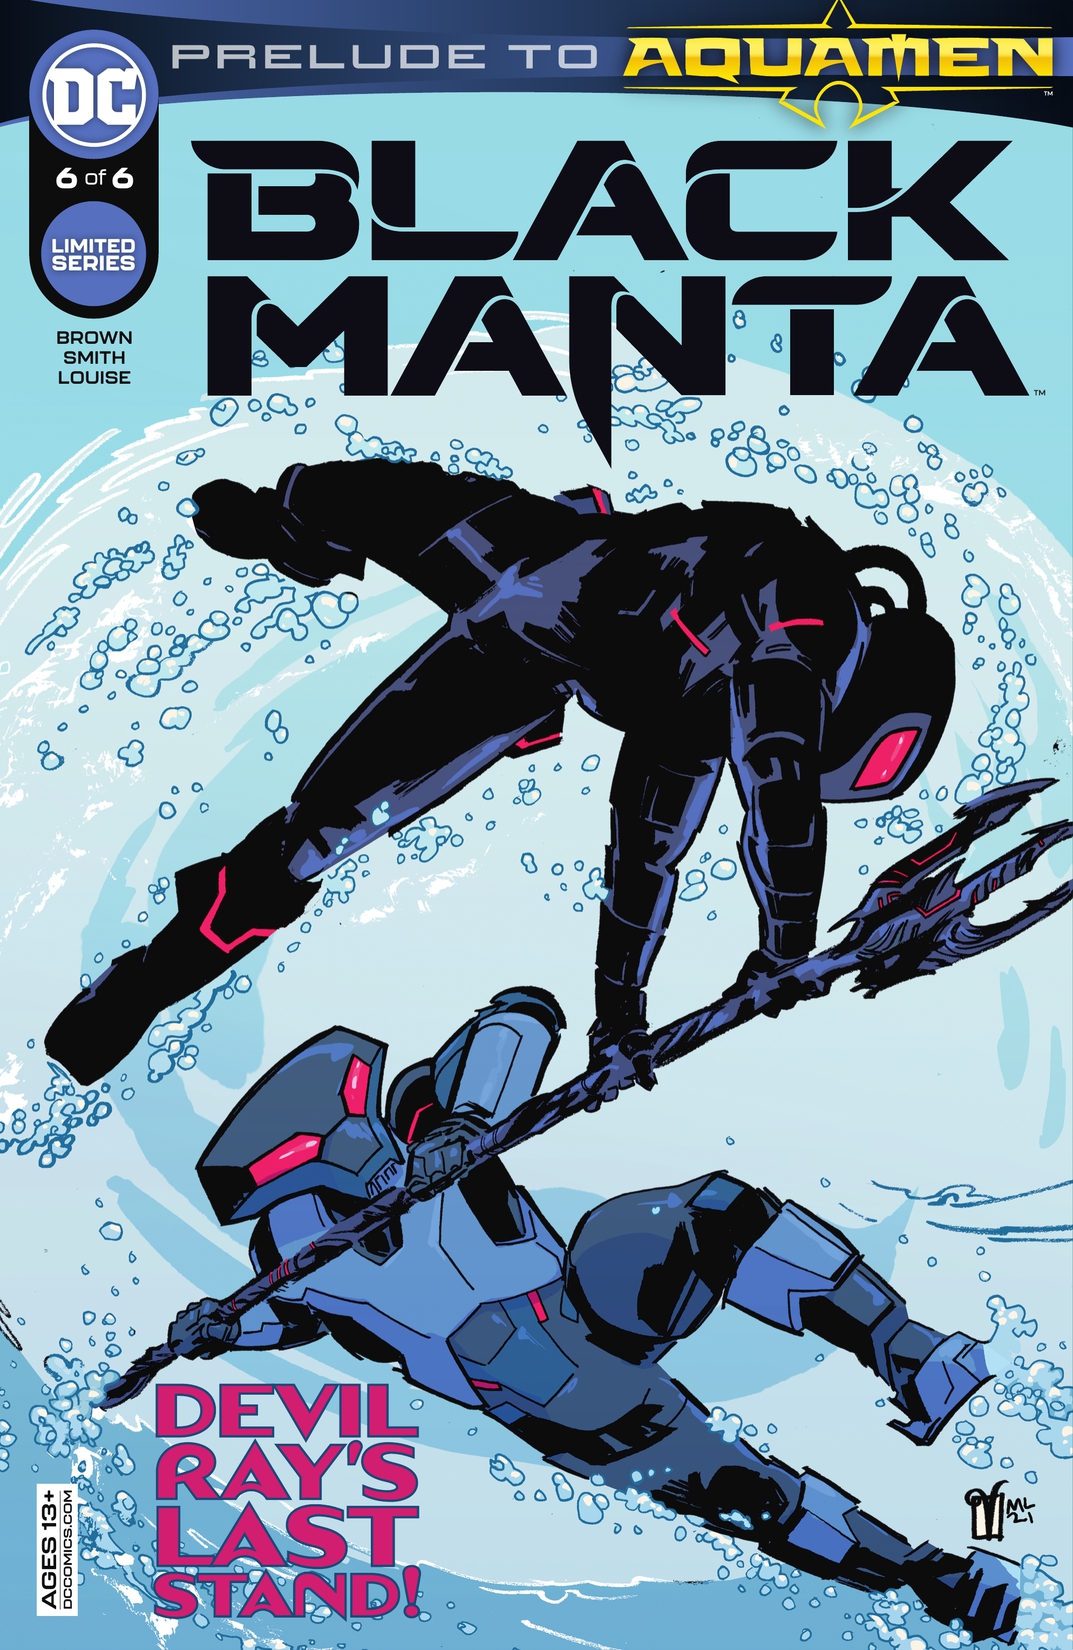 Black Manta #6 preview images